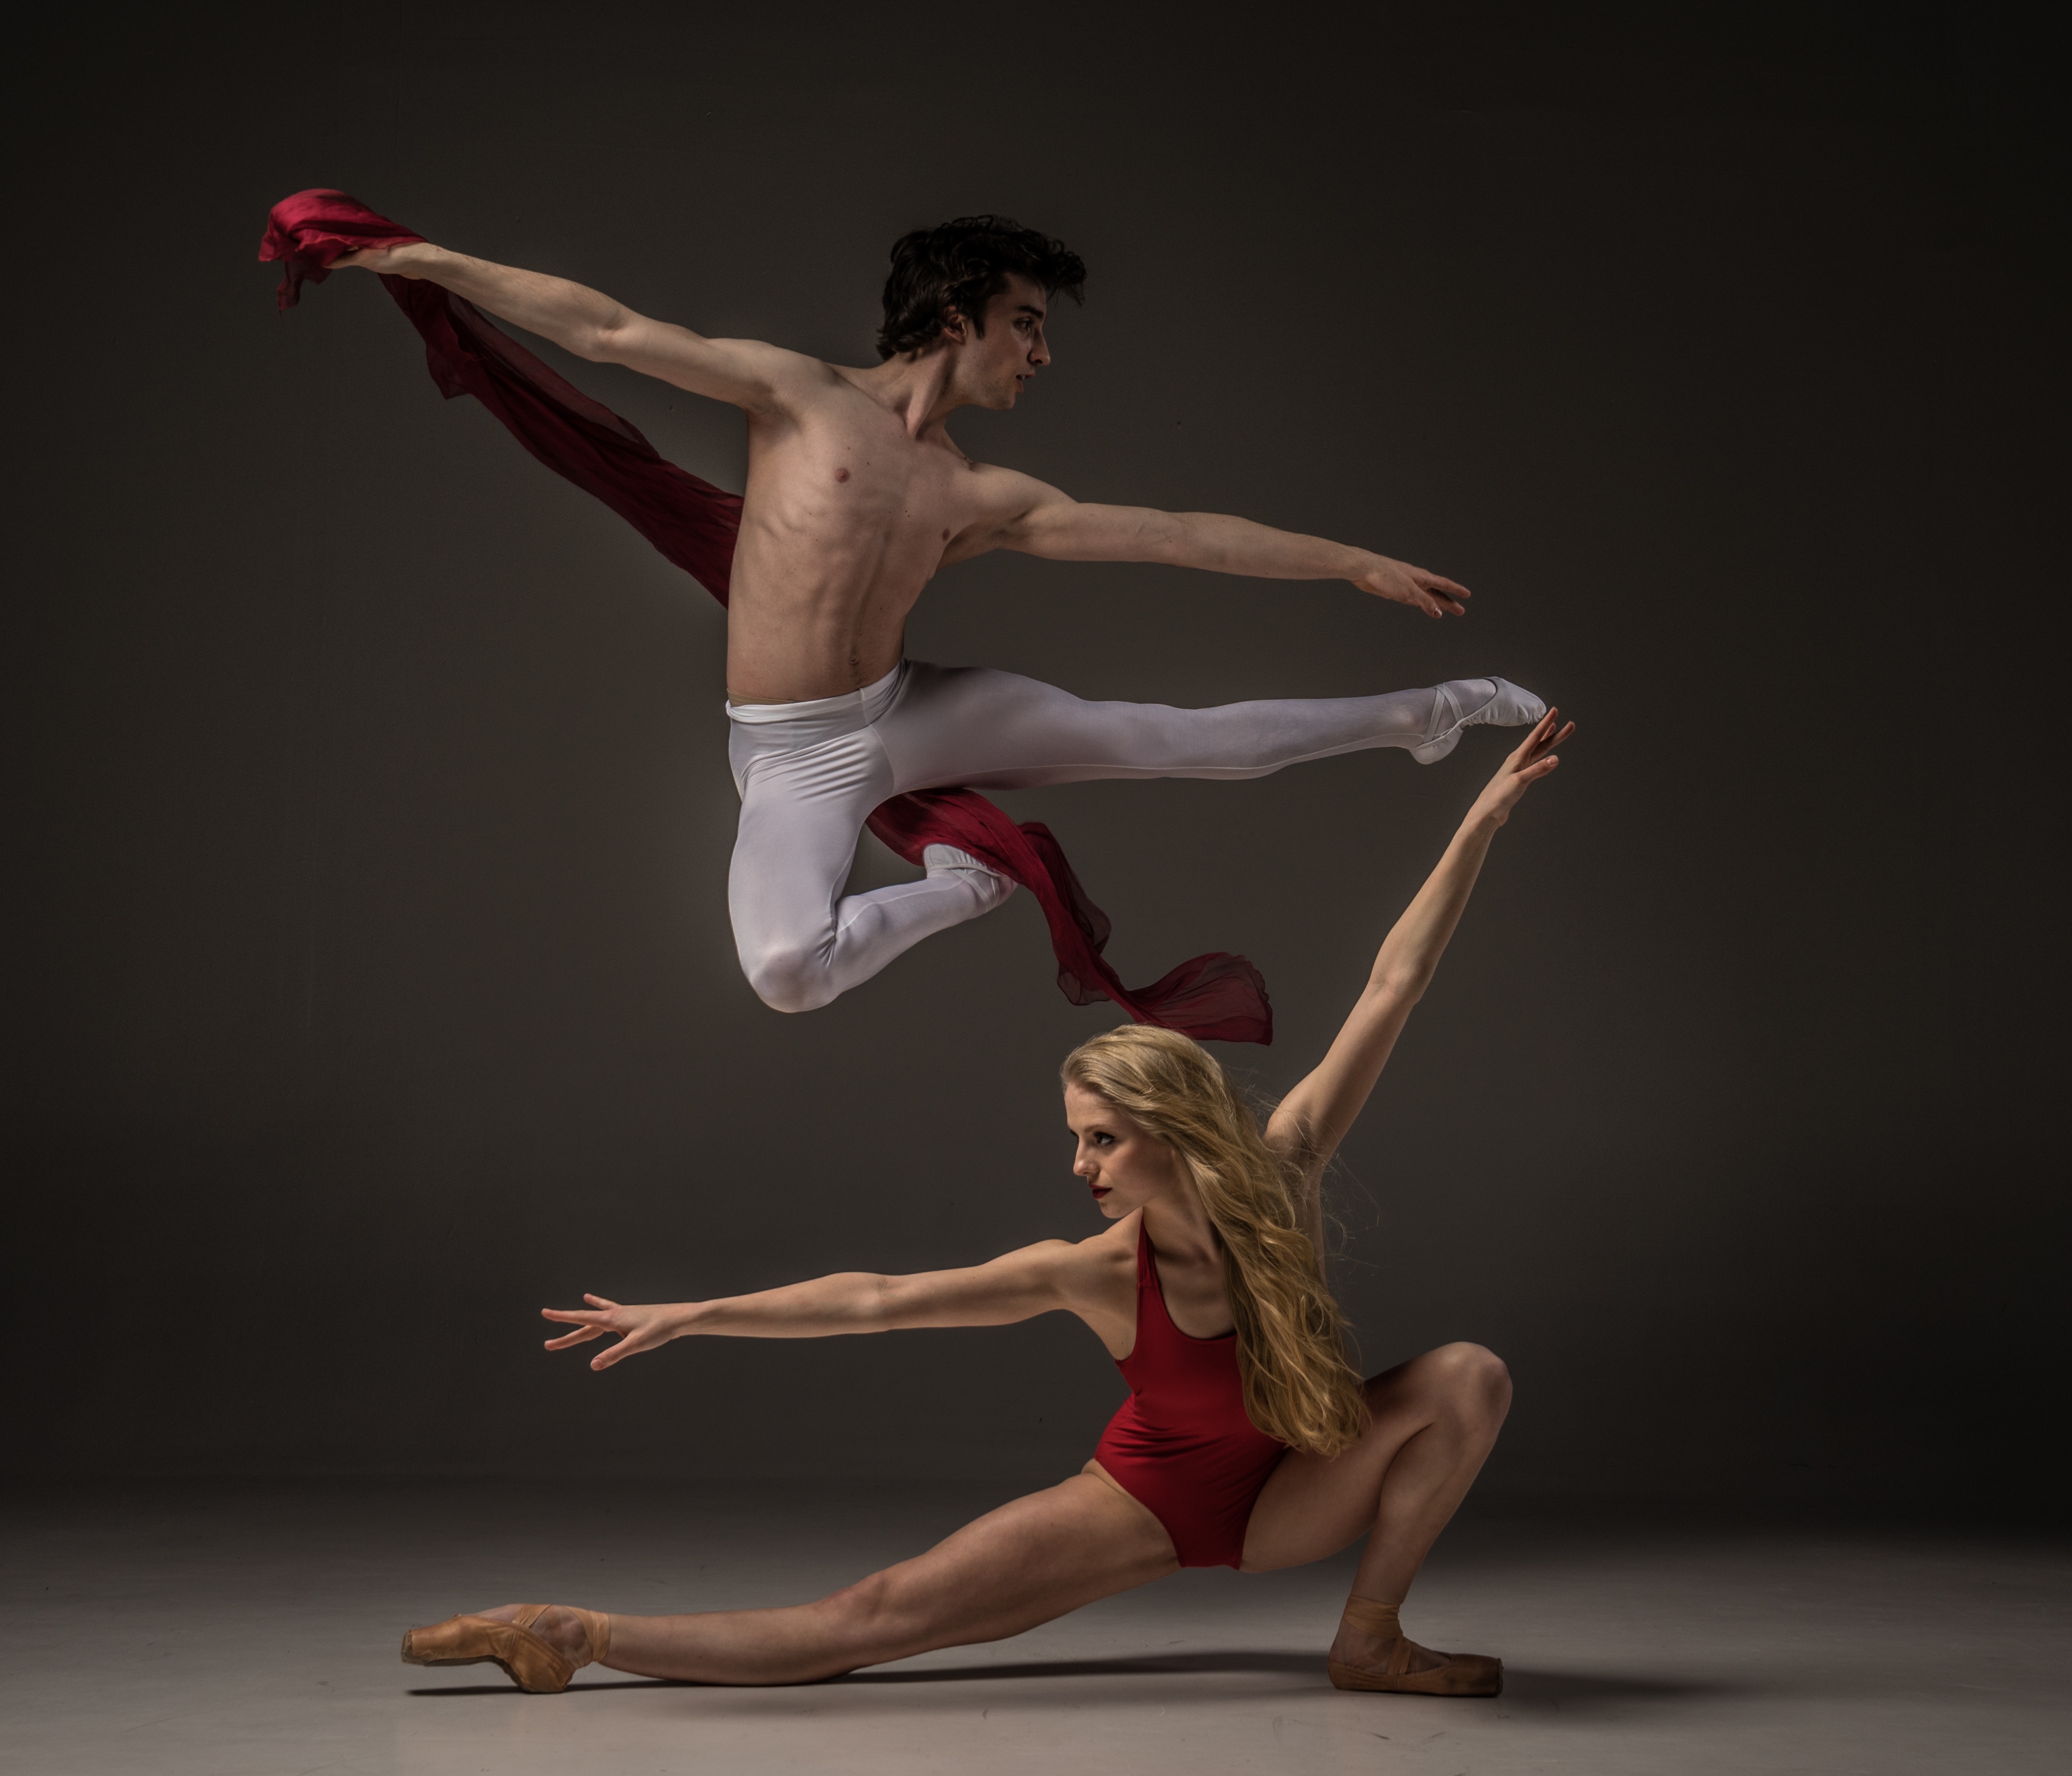 Dancers demonstrate secrets of collaboration